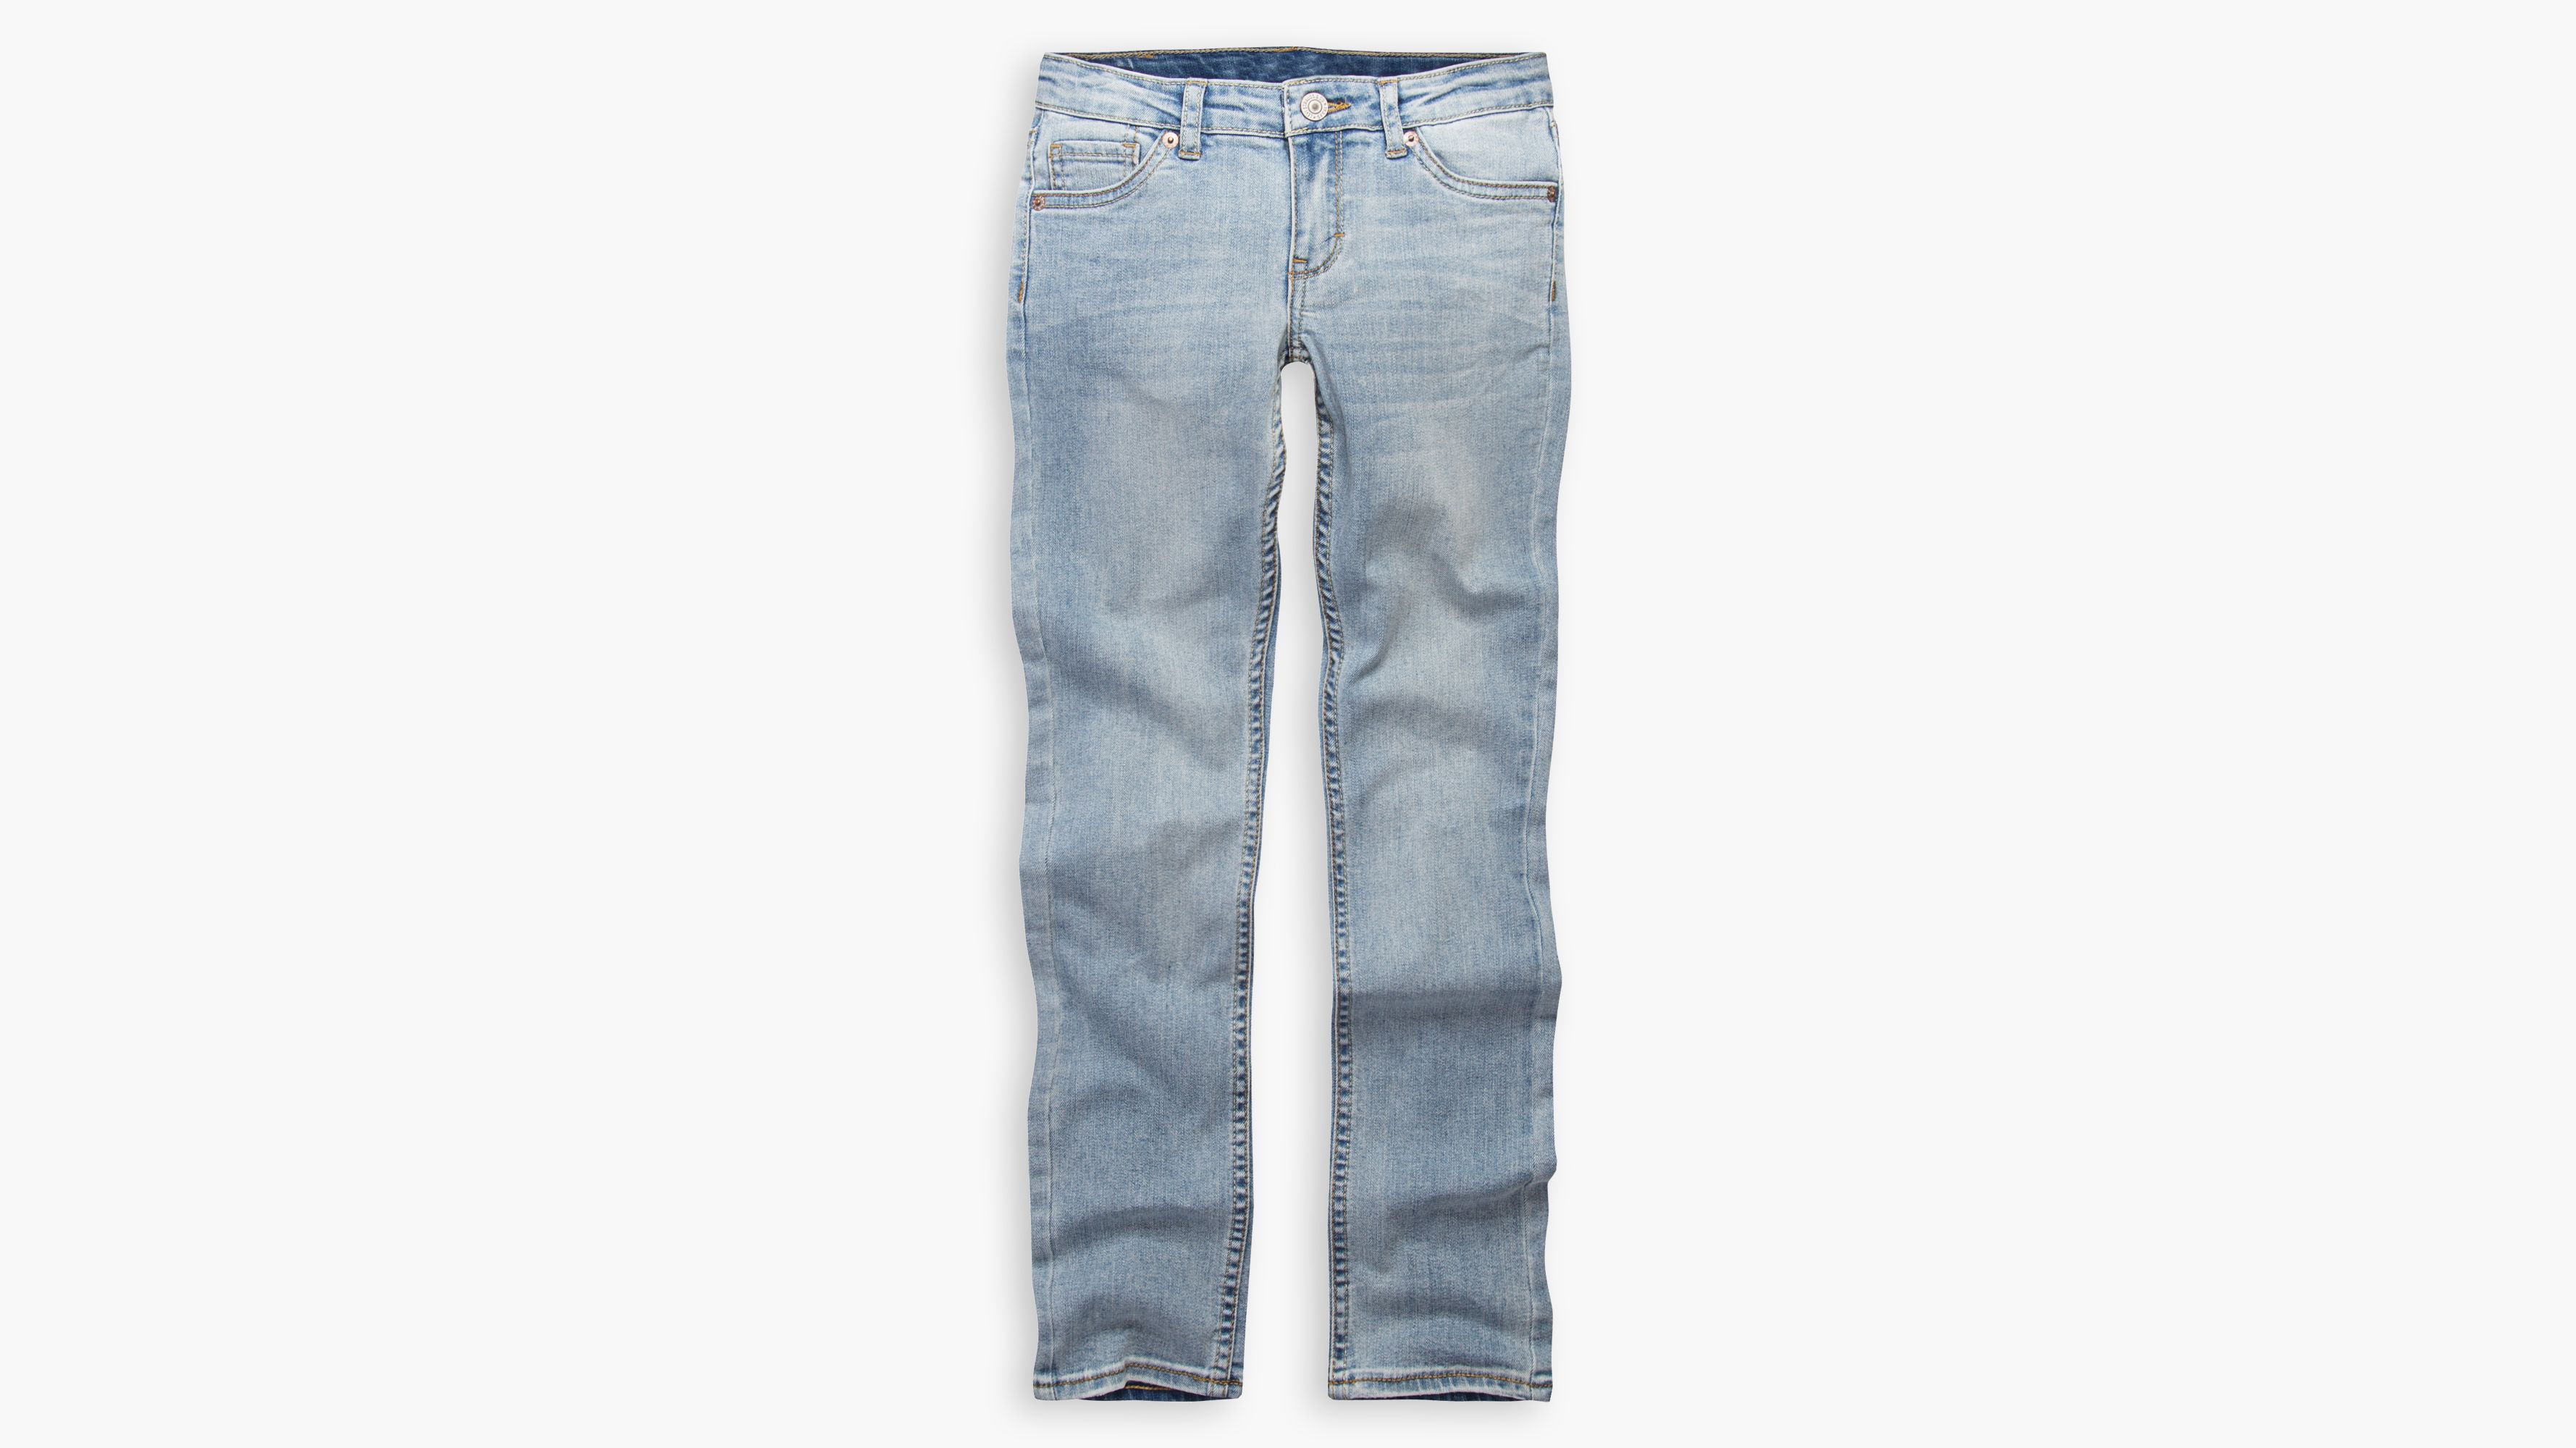 levi's 711 skinny fit jeans